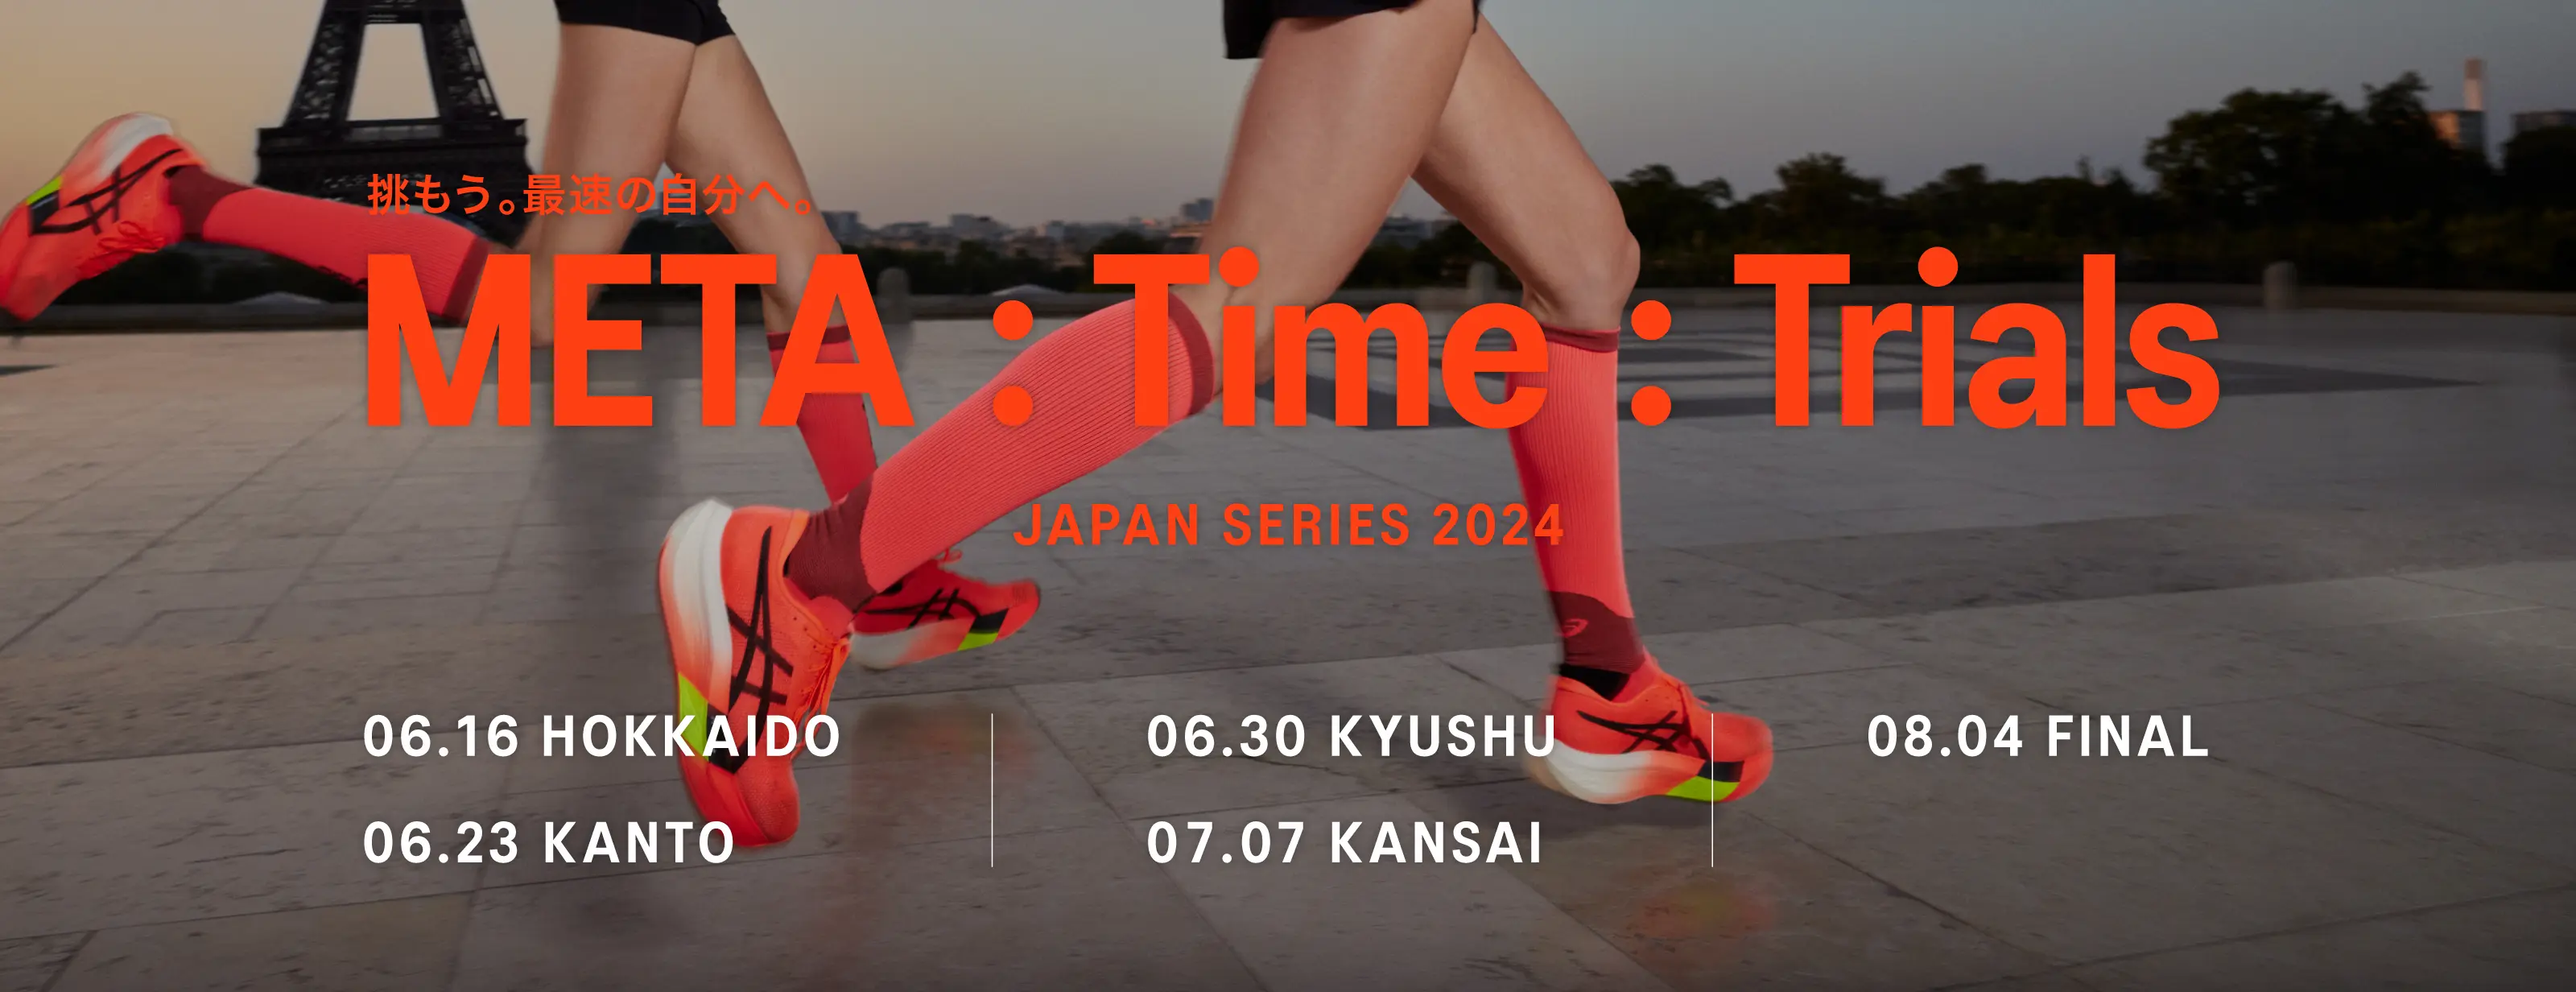 META: Time: Trials JAPAN SERIES 2024 03.11 ENTRY START